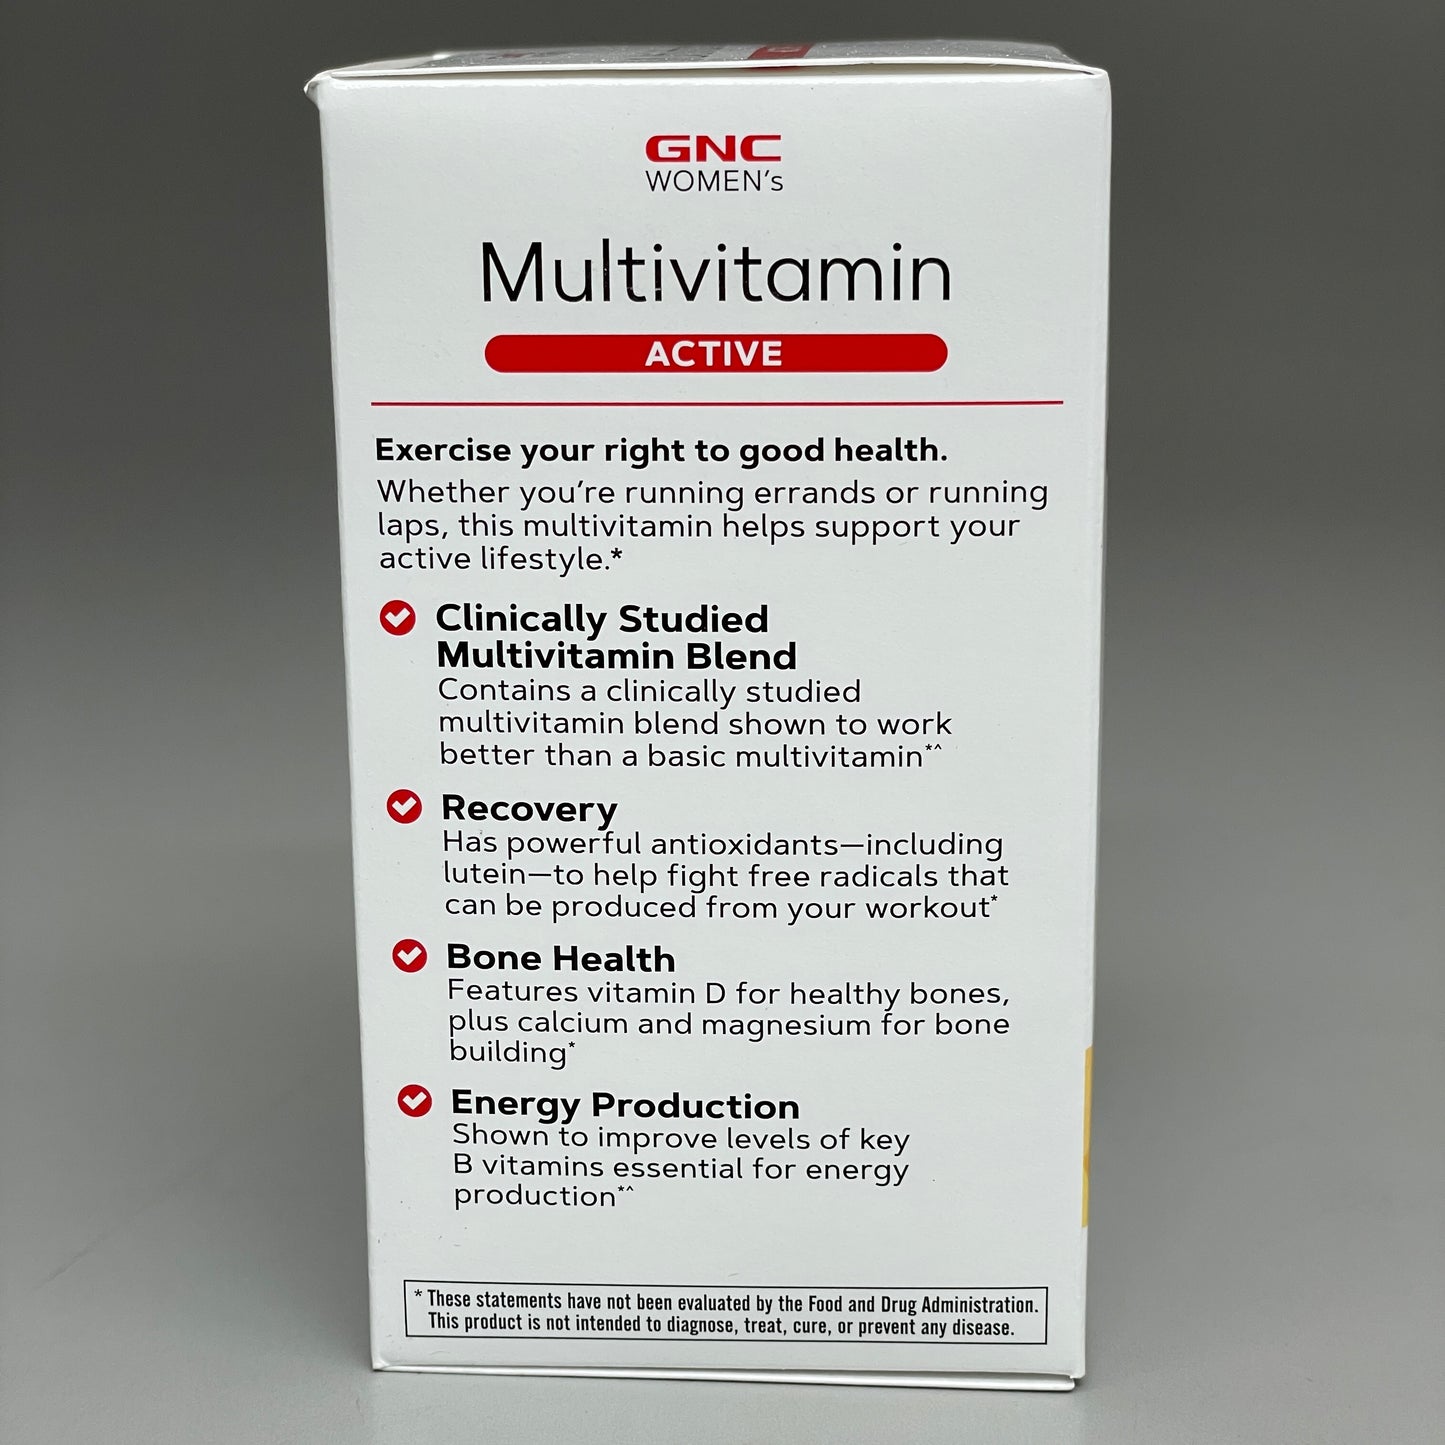 GNC Women's Multivitamin Active Formula Athletic Dietary Supplement 90 Caplets BB 03/24 (New)